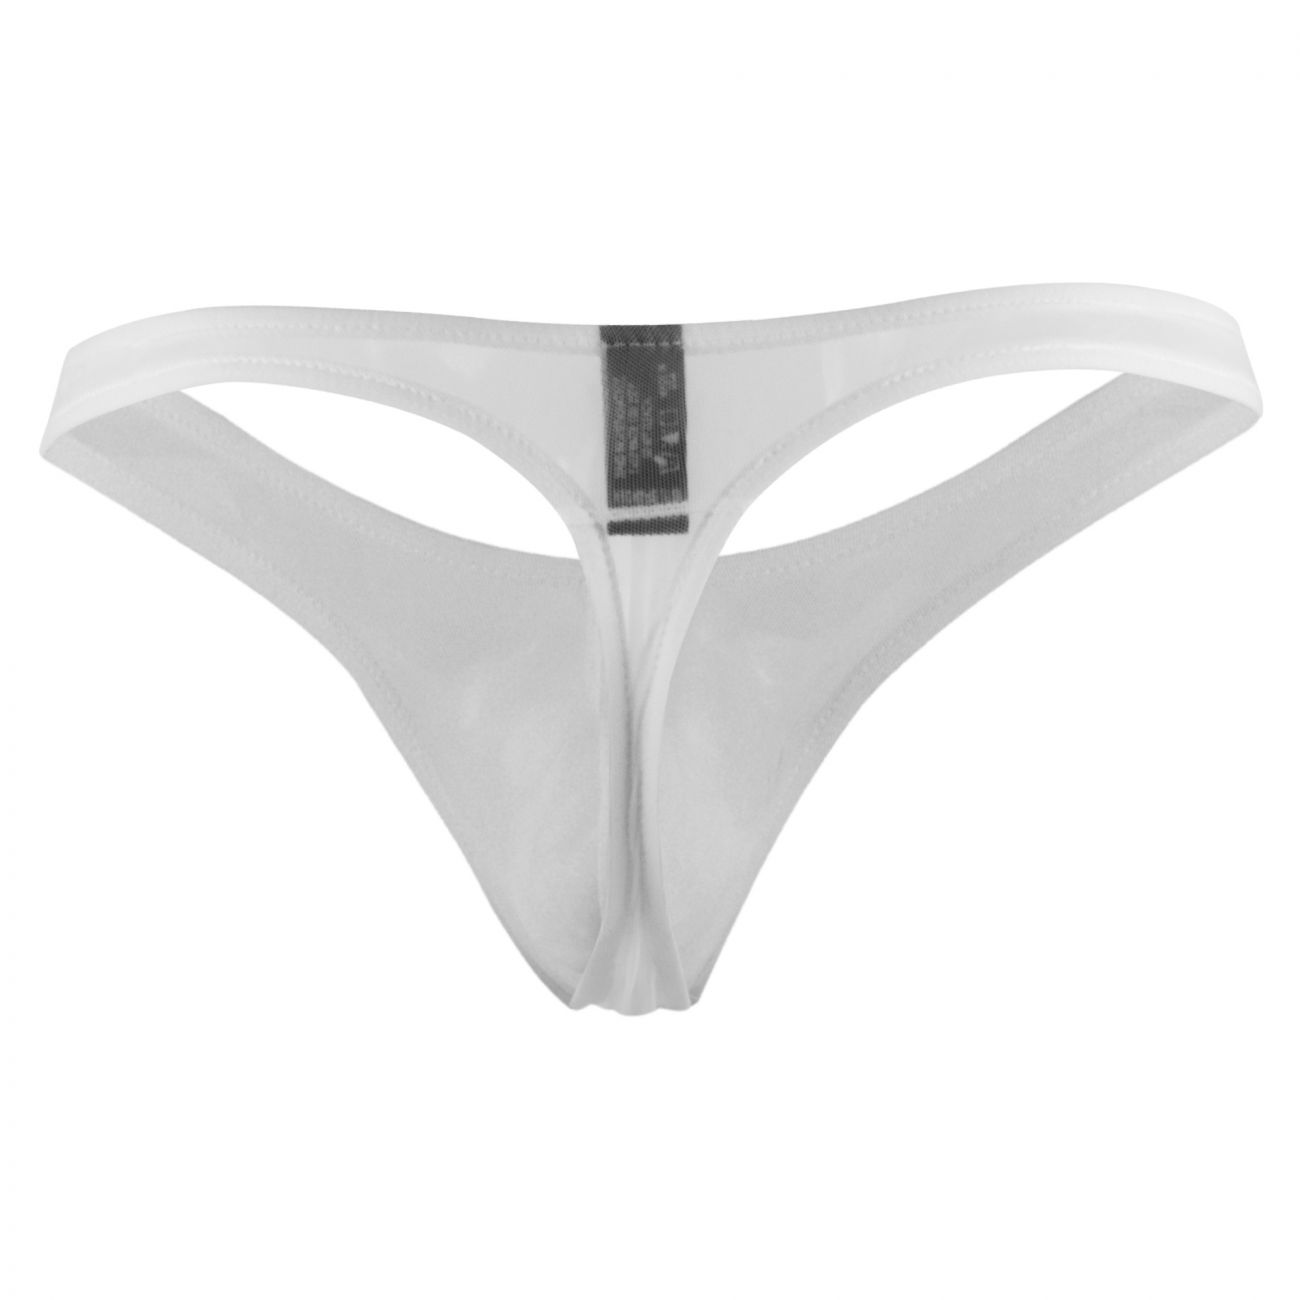 Mens Underwear: Male Power PAK882 Euro Male Mesh Mini Pouch Thong | eBay